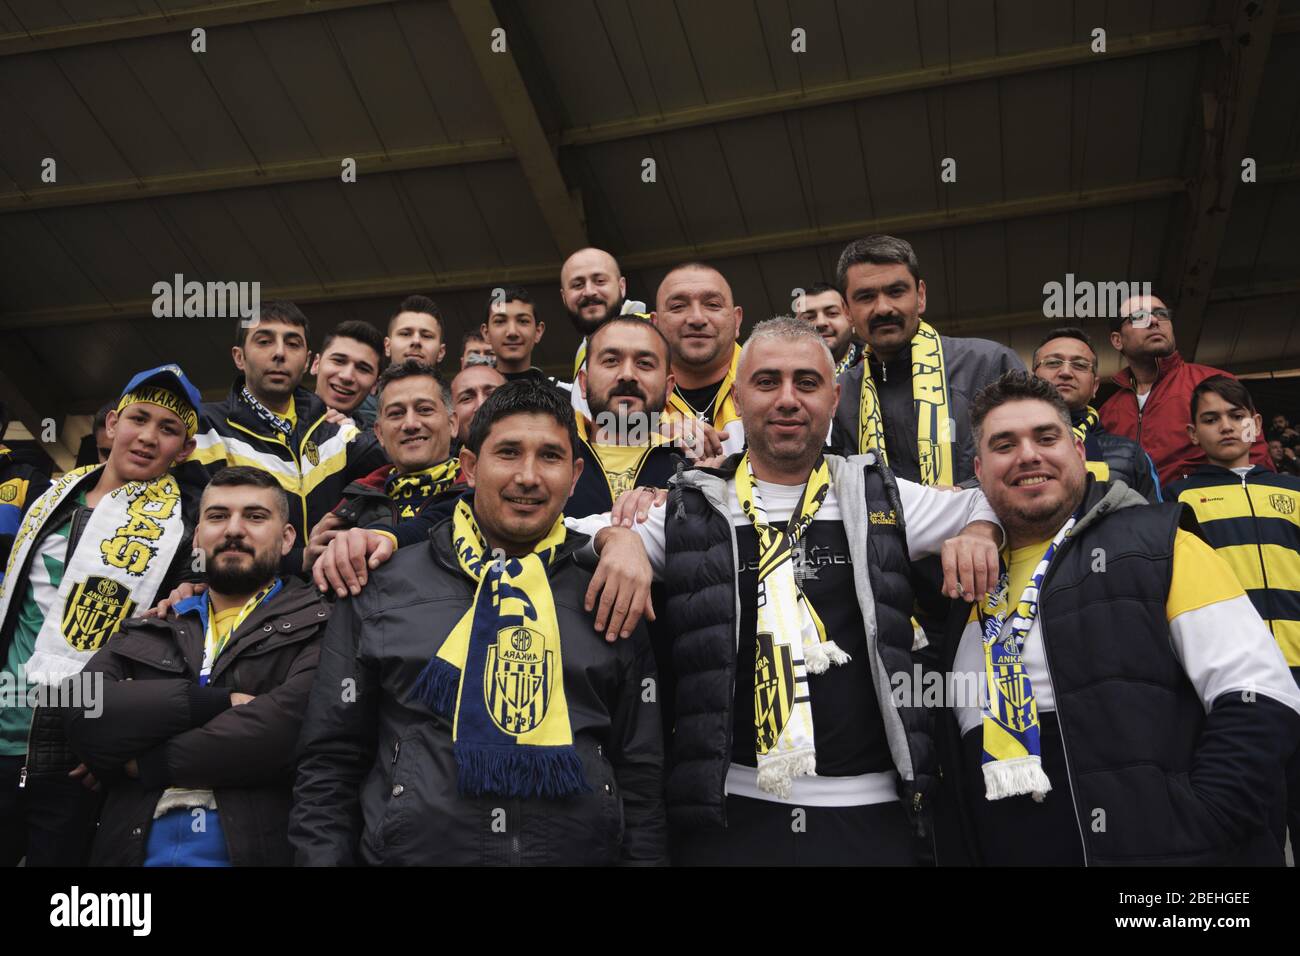 Ankara/Turkey - 05.03.2017 :A group of turkish football fans wearing uniforms looking to camera in Ankara Stock Photo